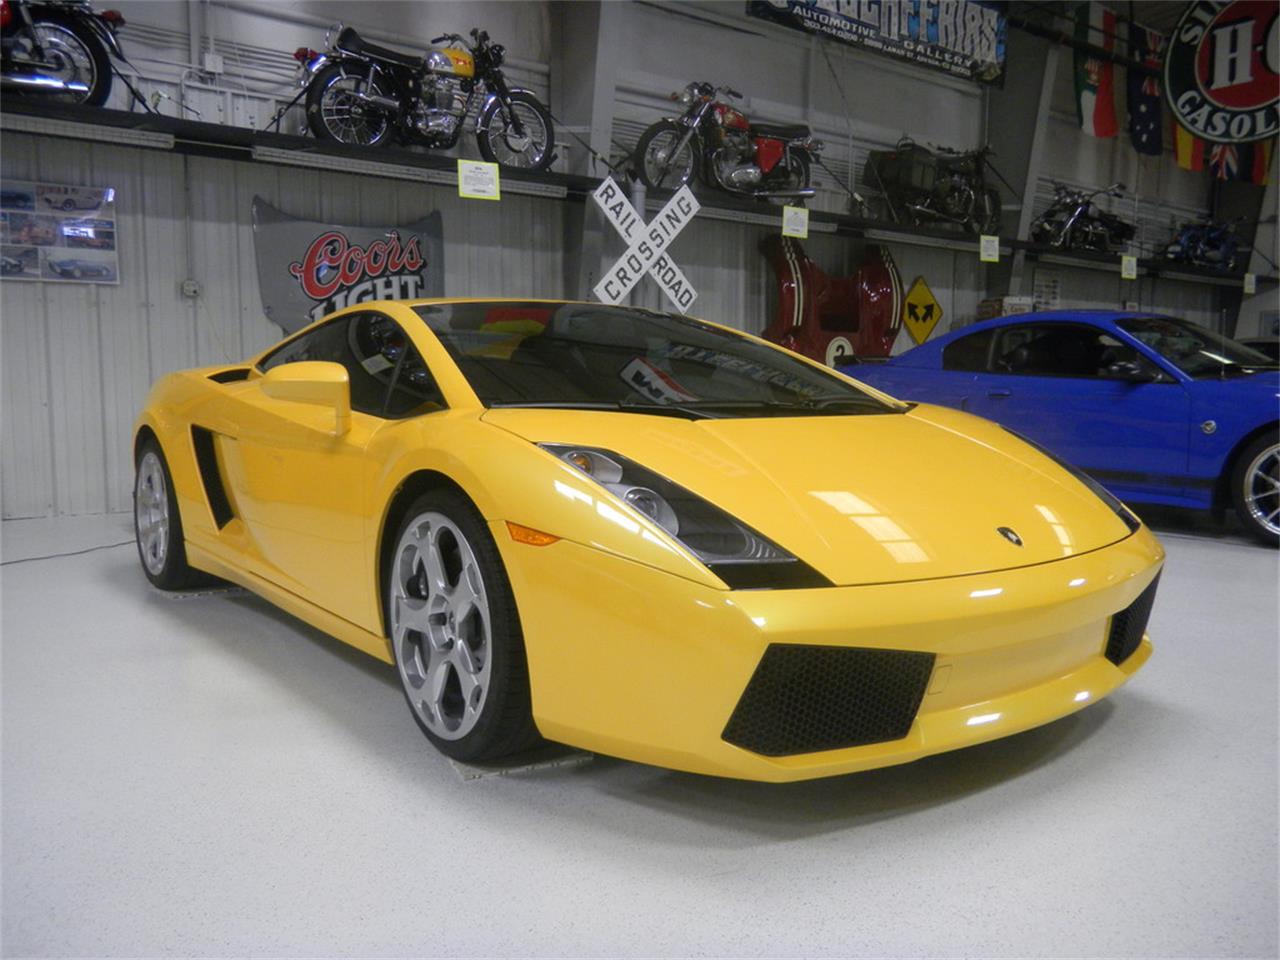 2005 Lamborghini Gallardo for Sale | ClassicCars.com | CC ...